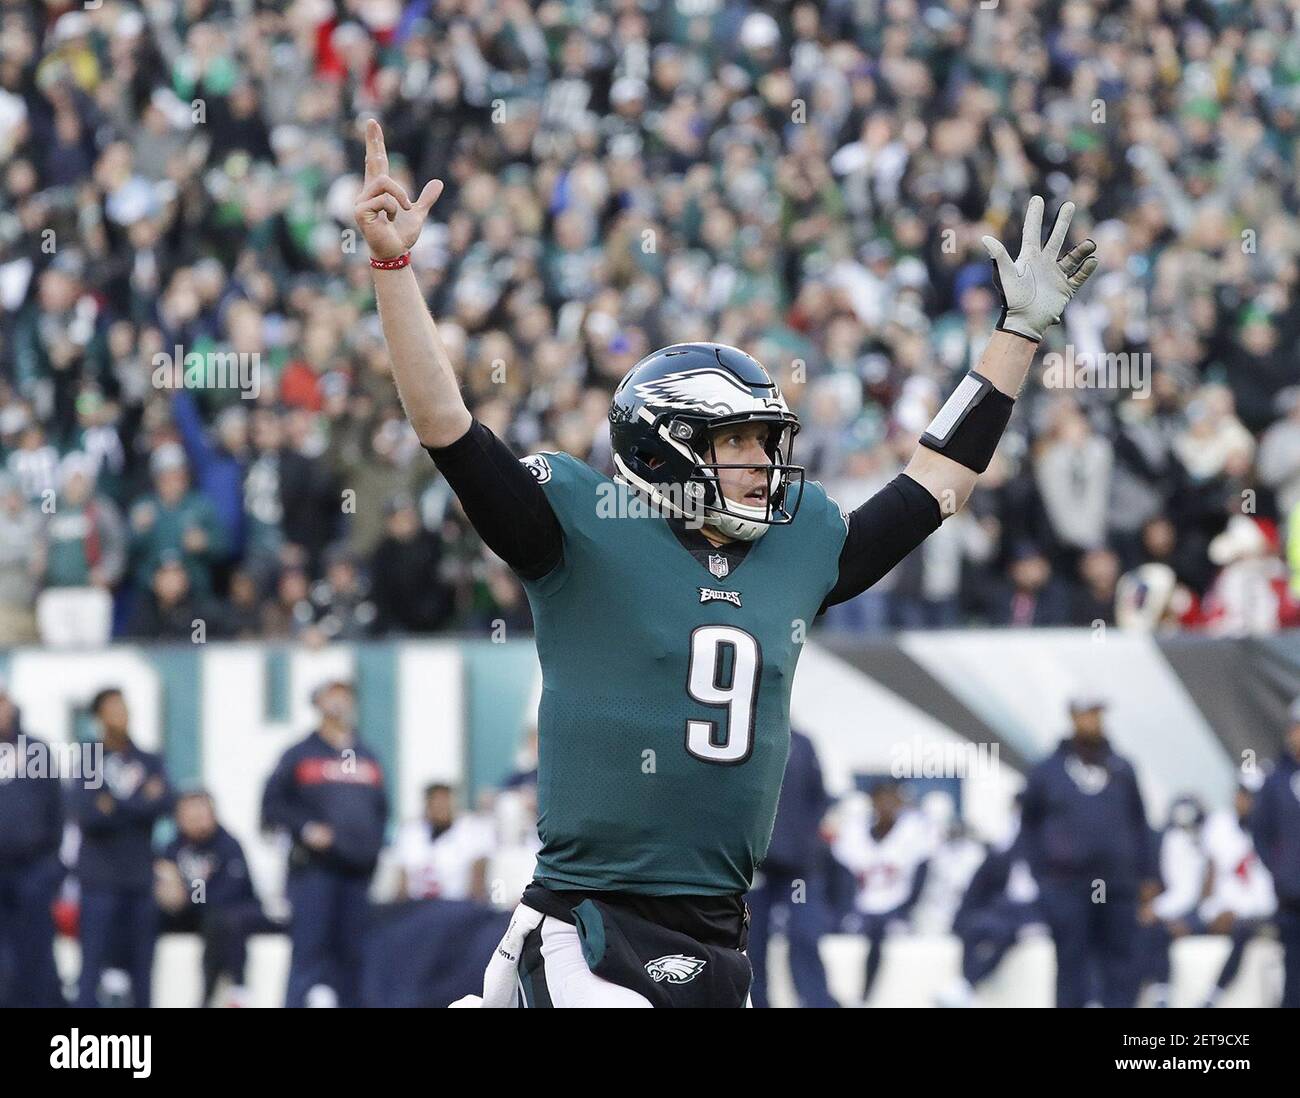 Philadelphia Eagles quarterback Nick Foles raises his arms after